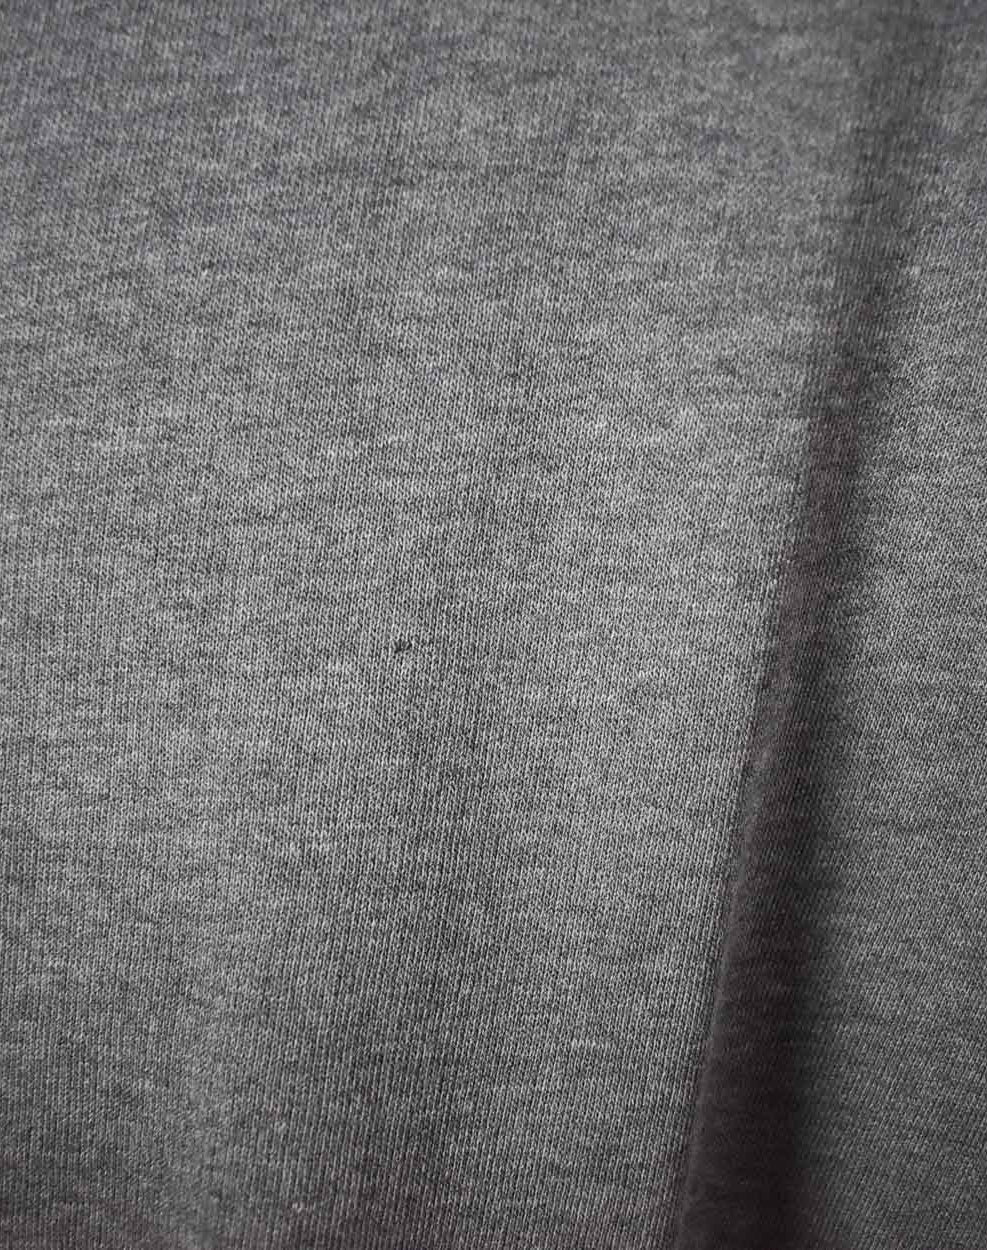 Grey Nike Authentic Sports Gear Long Sleeve Polo Shirt - Medium